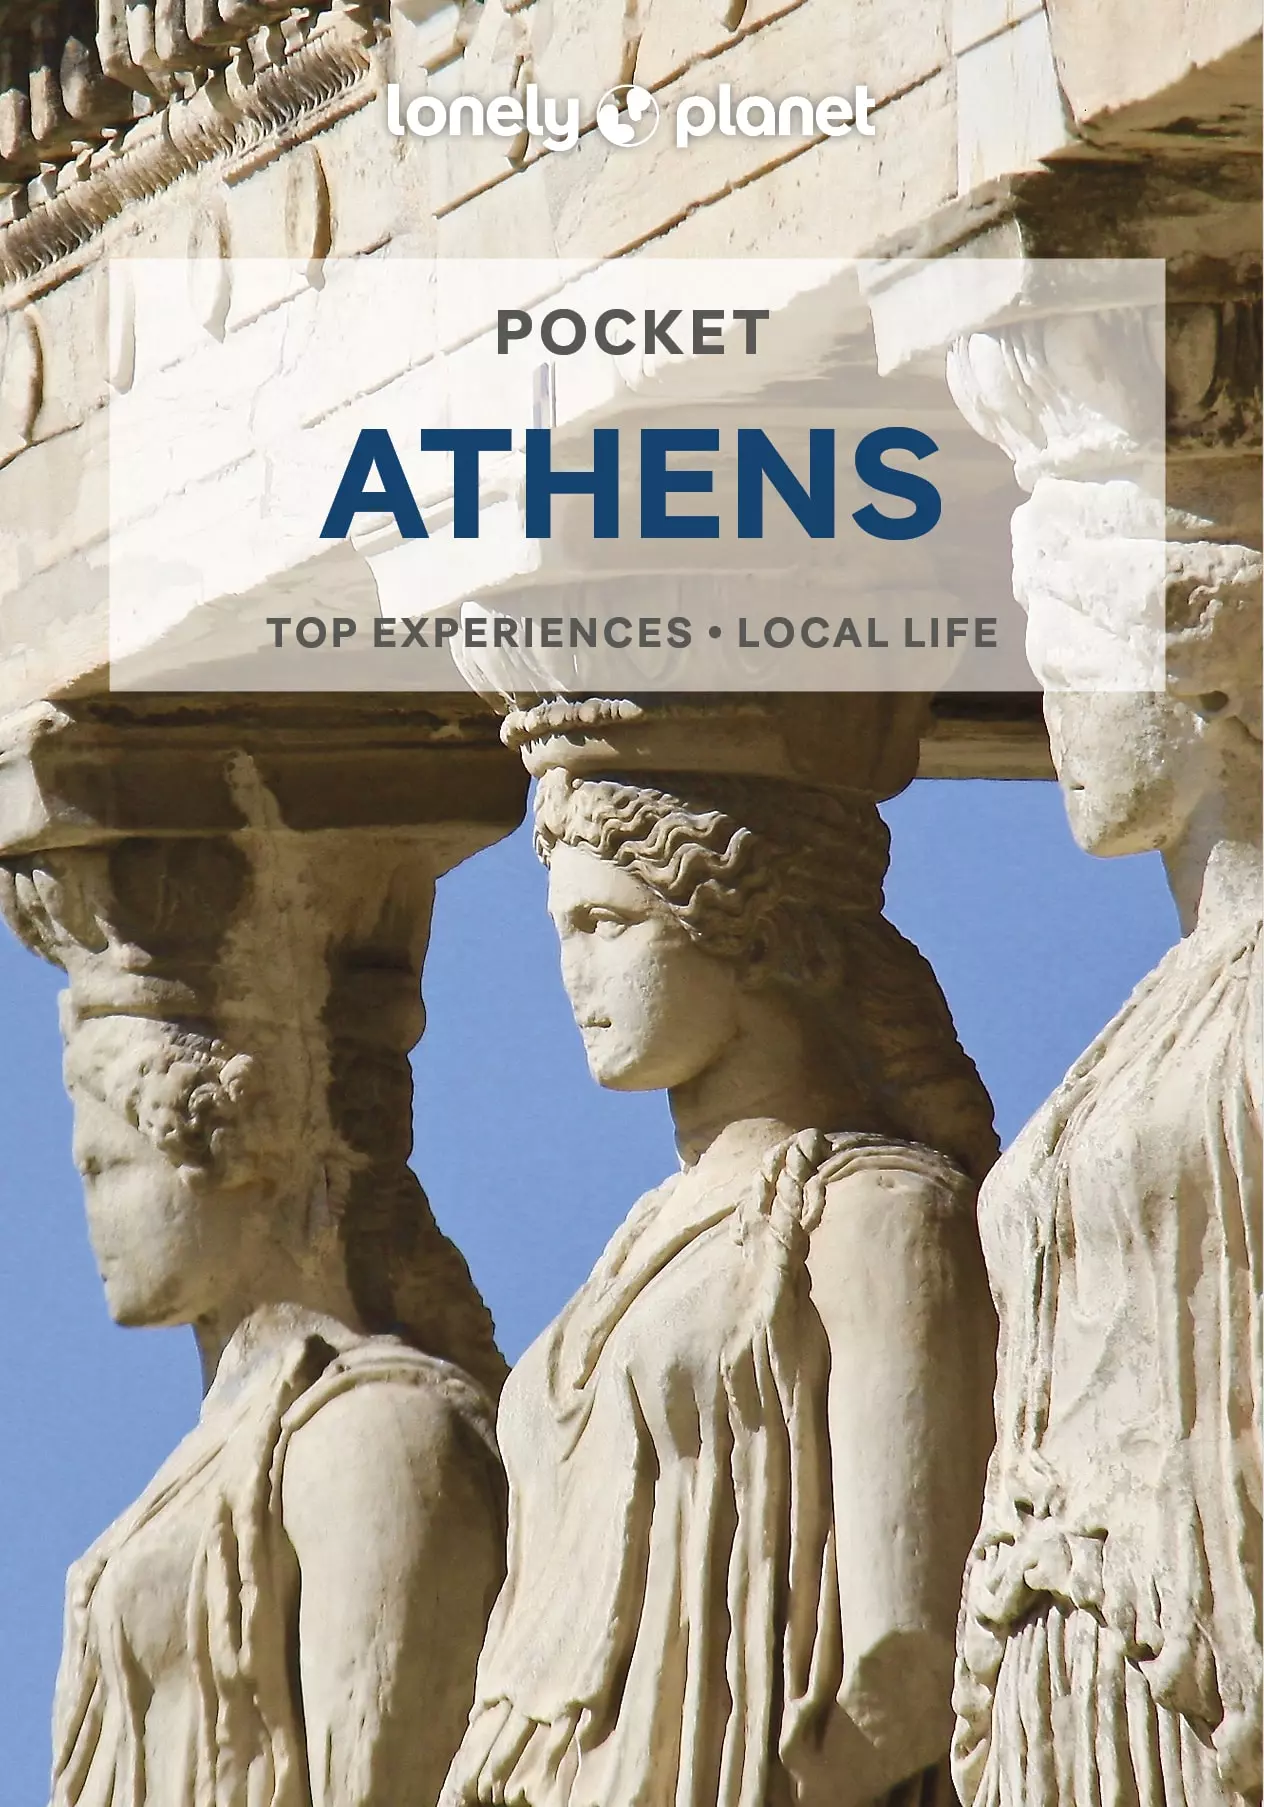 Atena Pocket ghid turistic Lonely Planet (engleză)